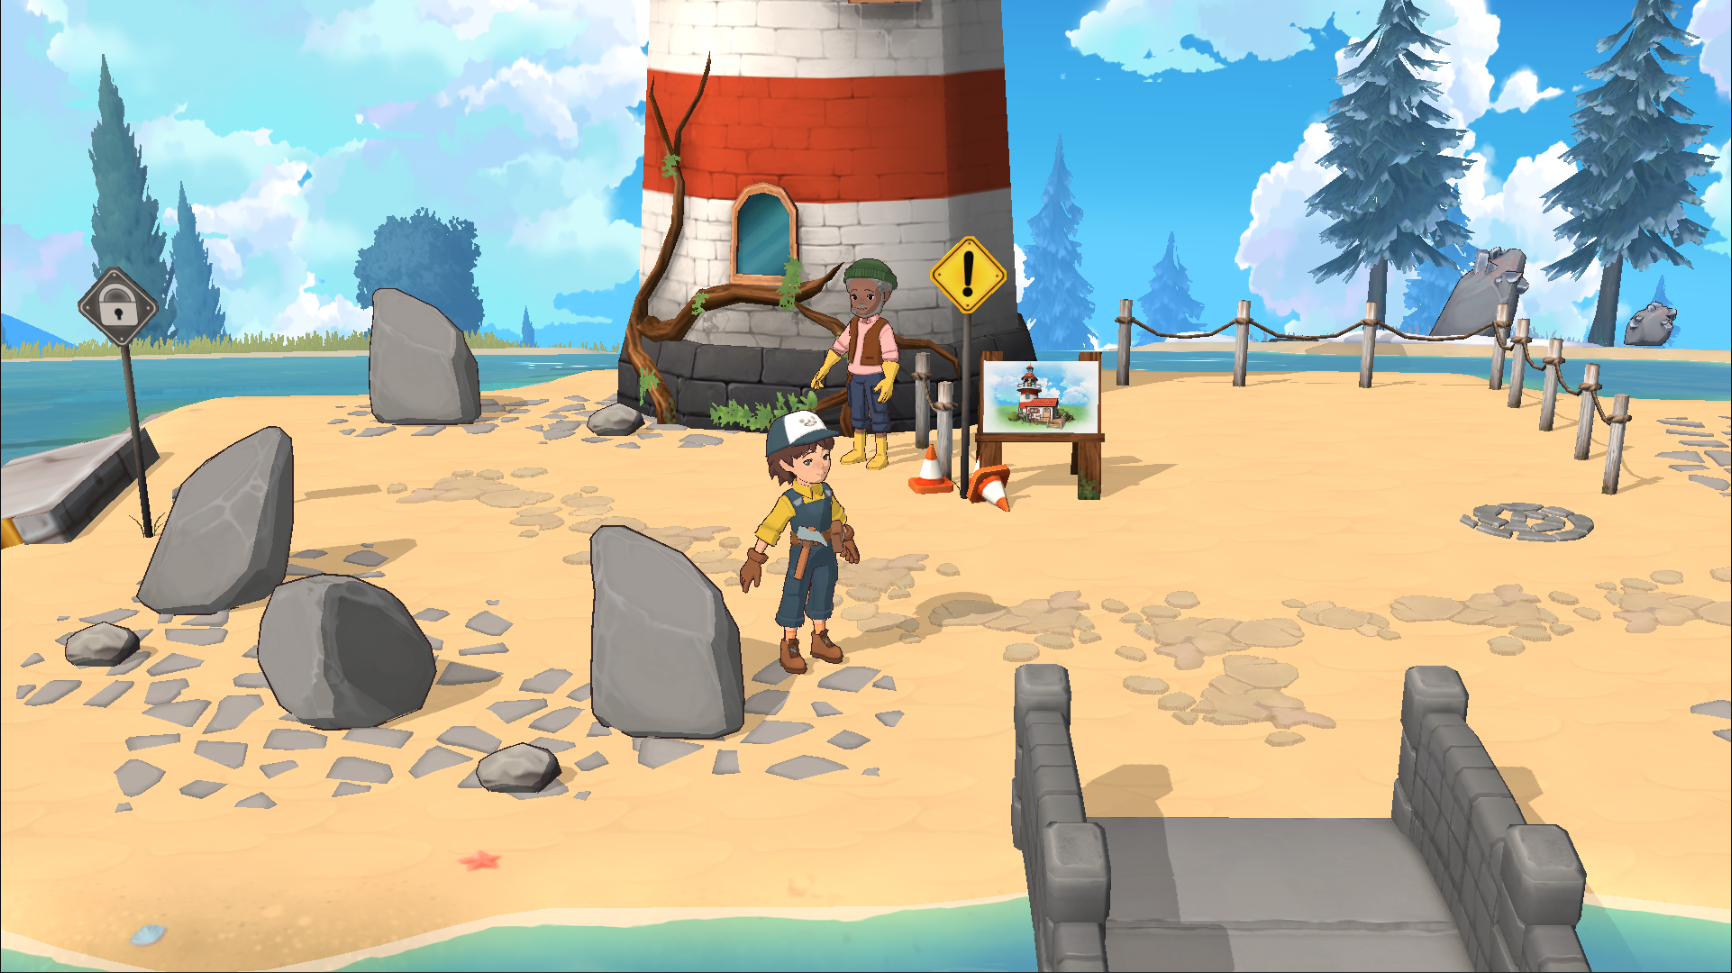 Screenshot 1 of หมู่เกาะโคซี่ - งานฝีมือและสร้าง 0.3.1